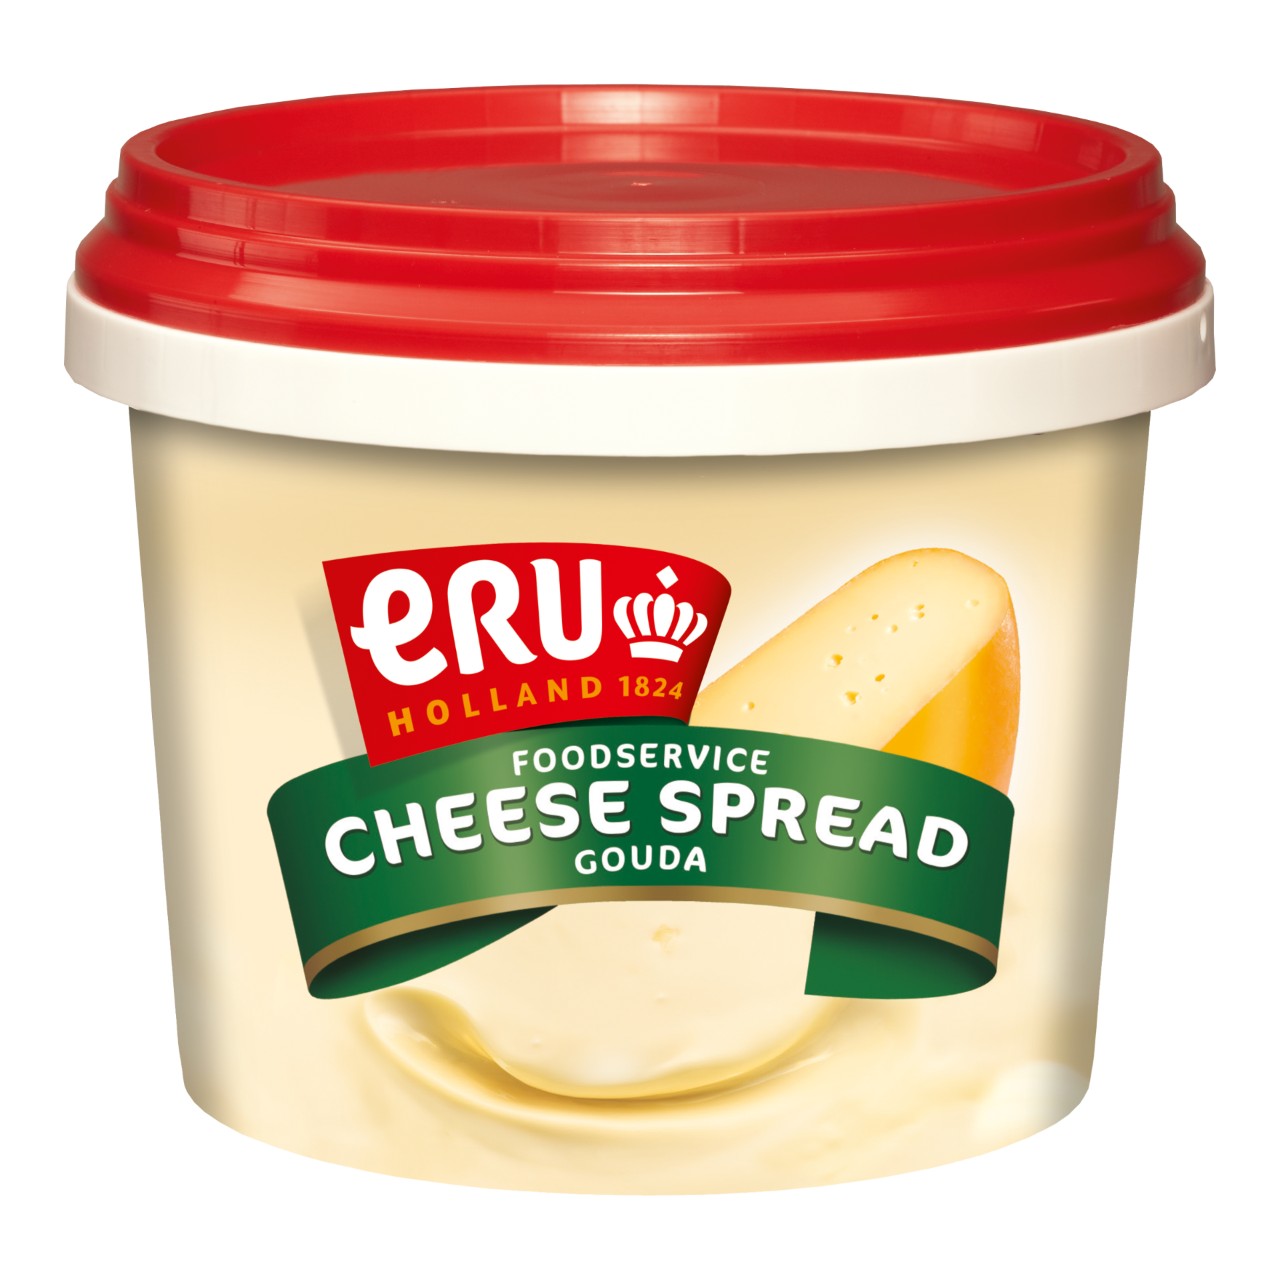 Cheese spread gouda